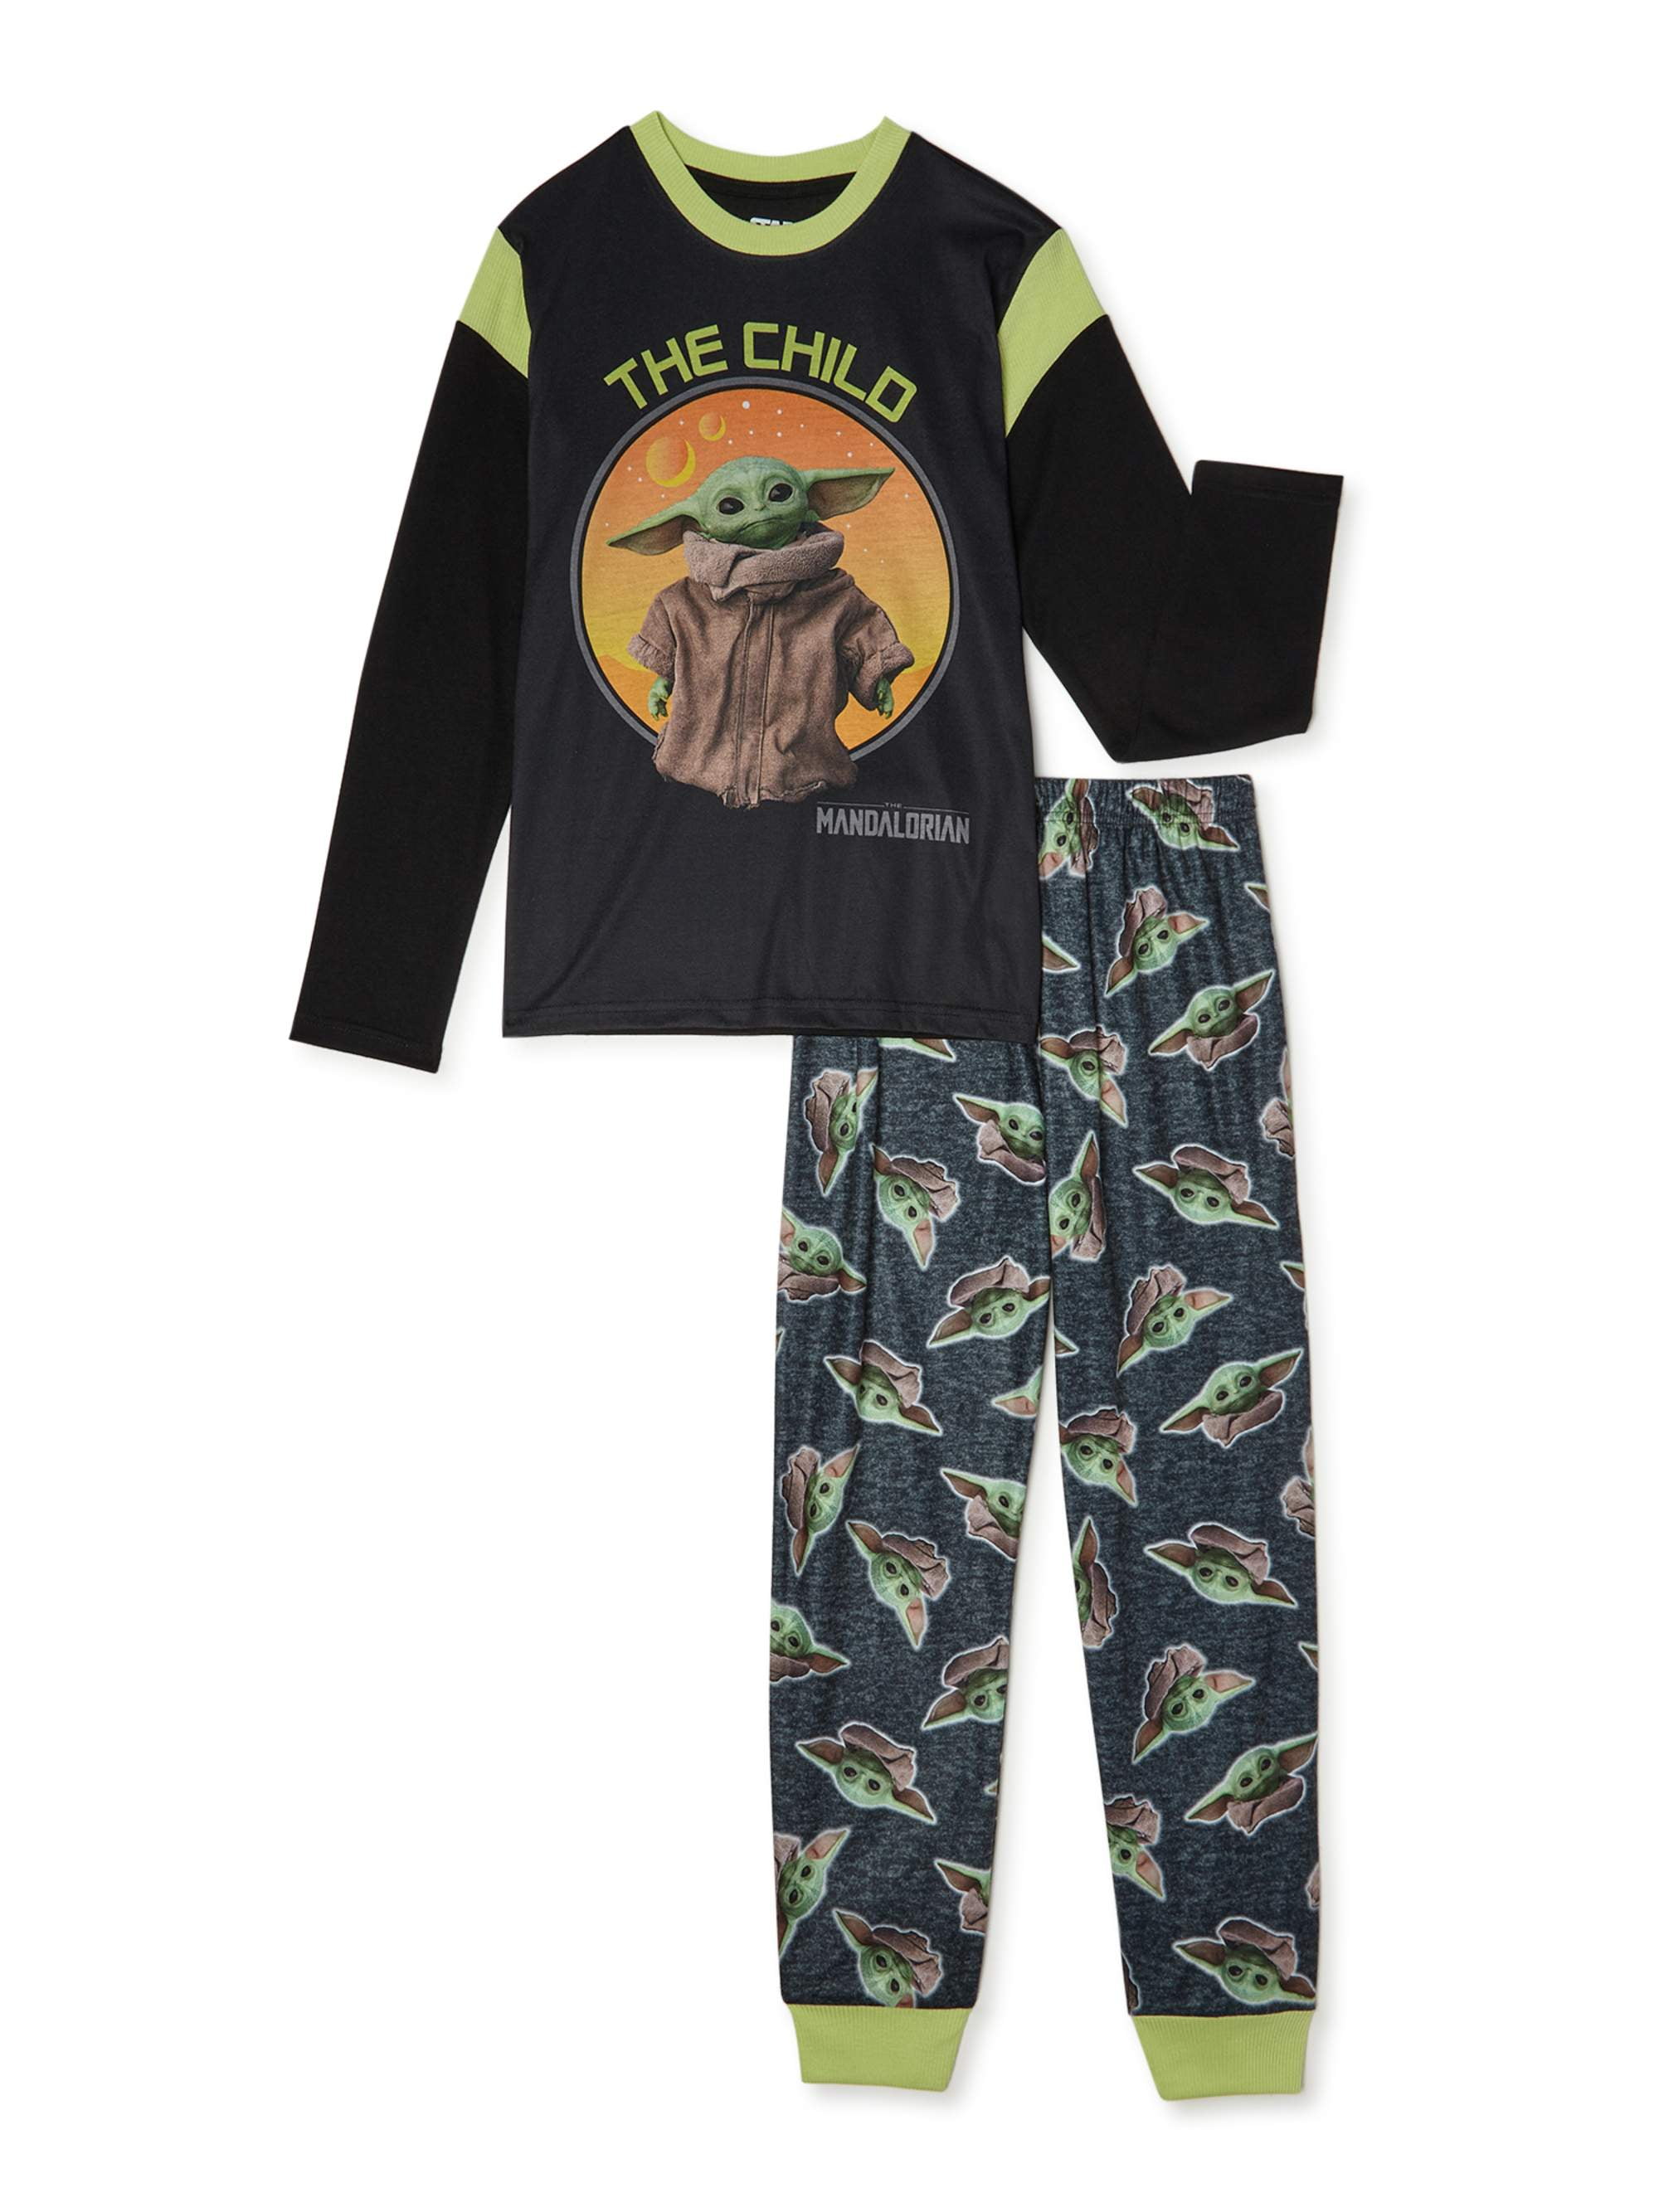 Kids Disney Boys Star Wars Pyjamas Sleepwear Nightwear Ages 2 to 8 Years 